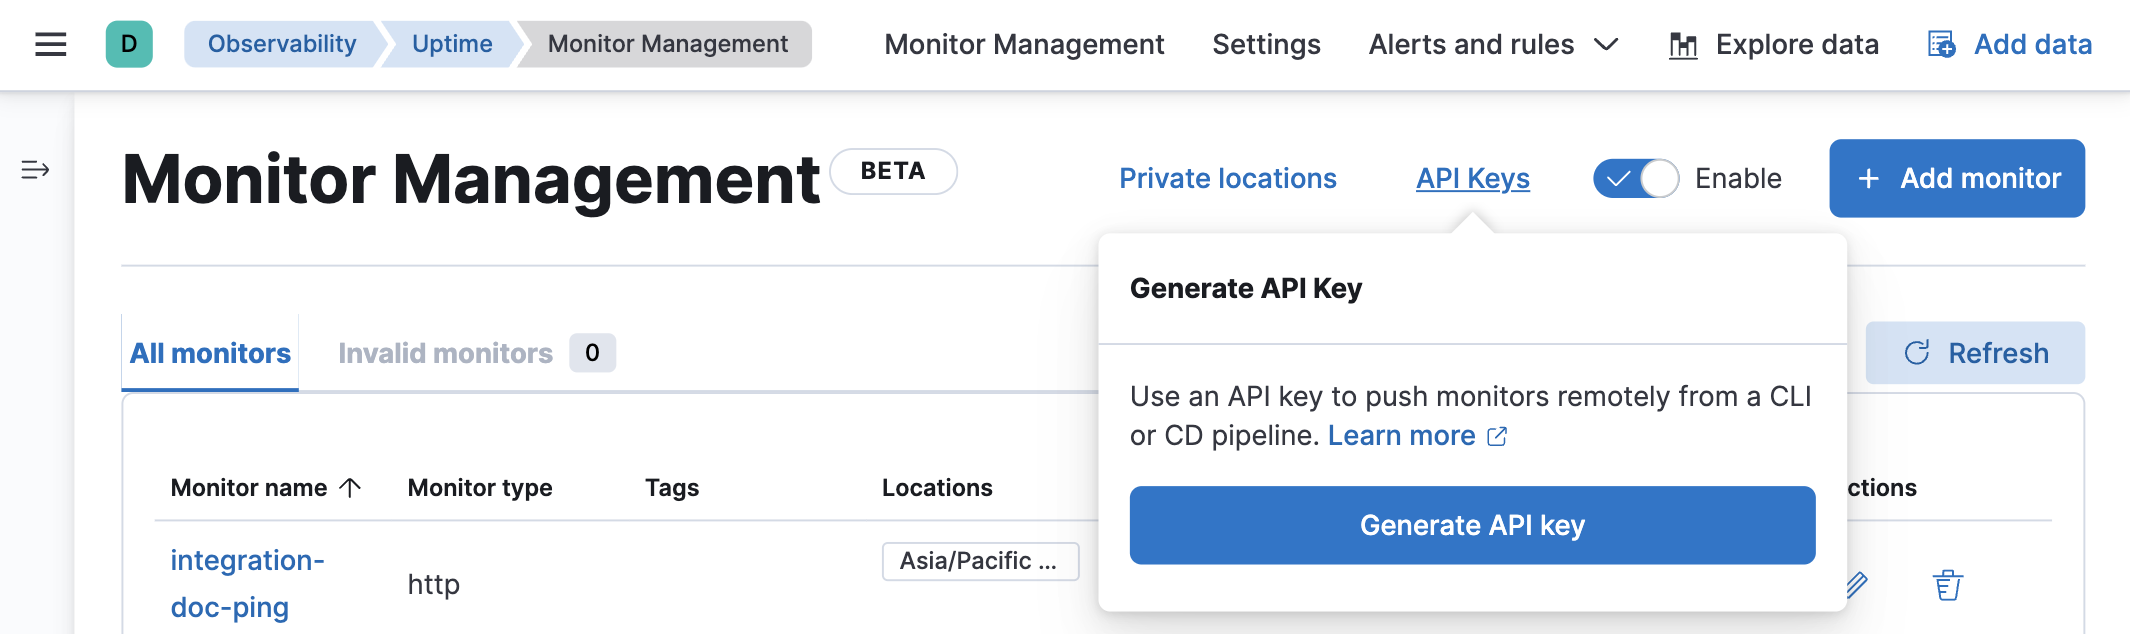 API Keys tooltip on the Uptime app’s Monitor Management page